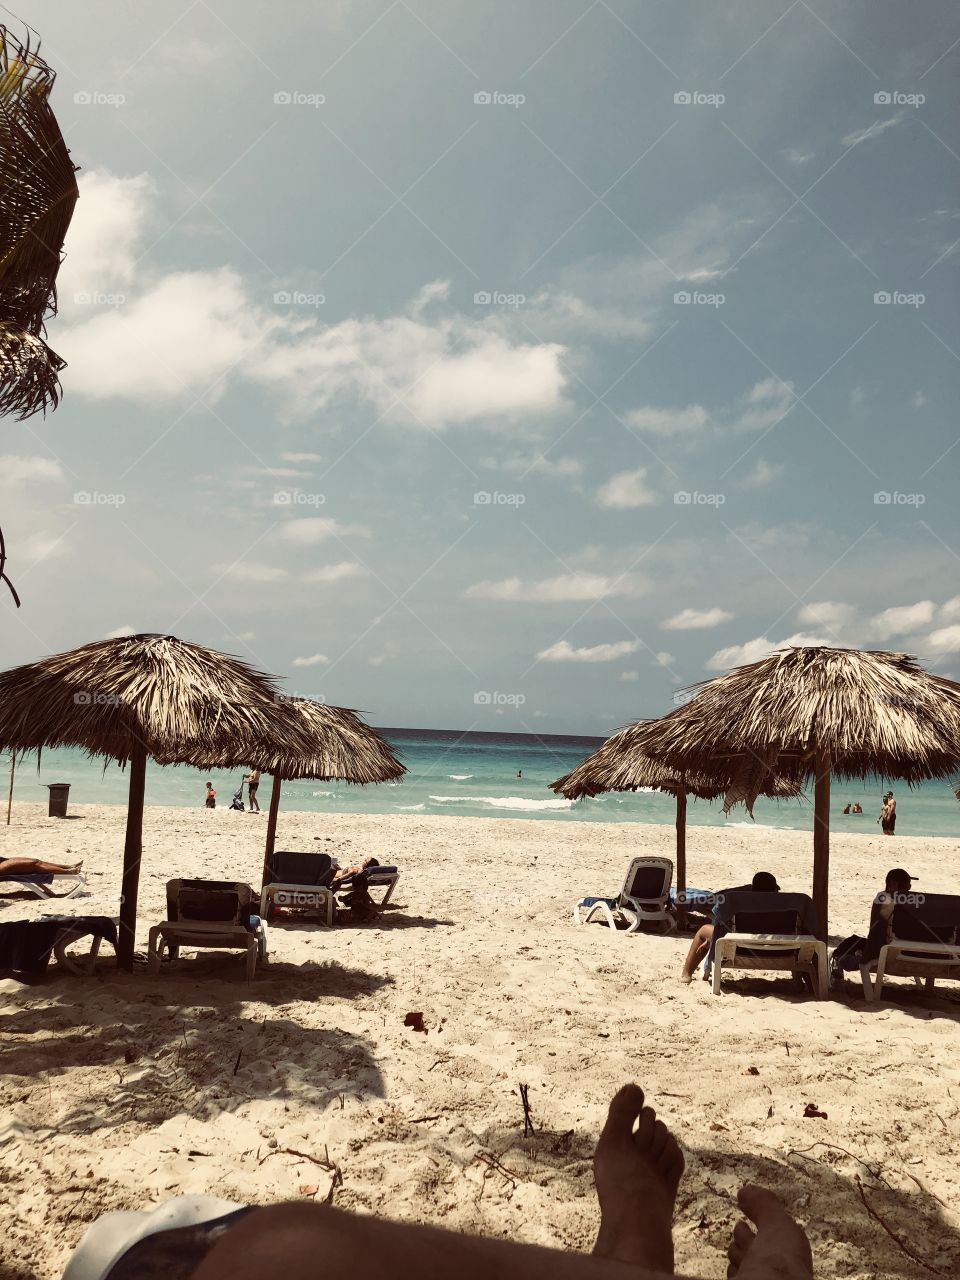 Cuba beach 